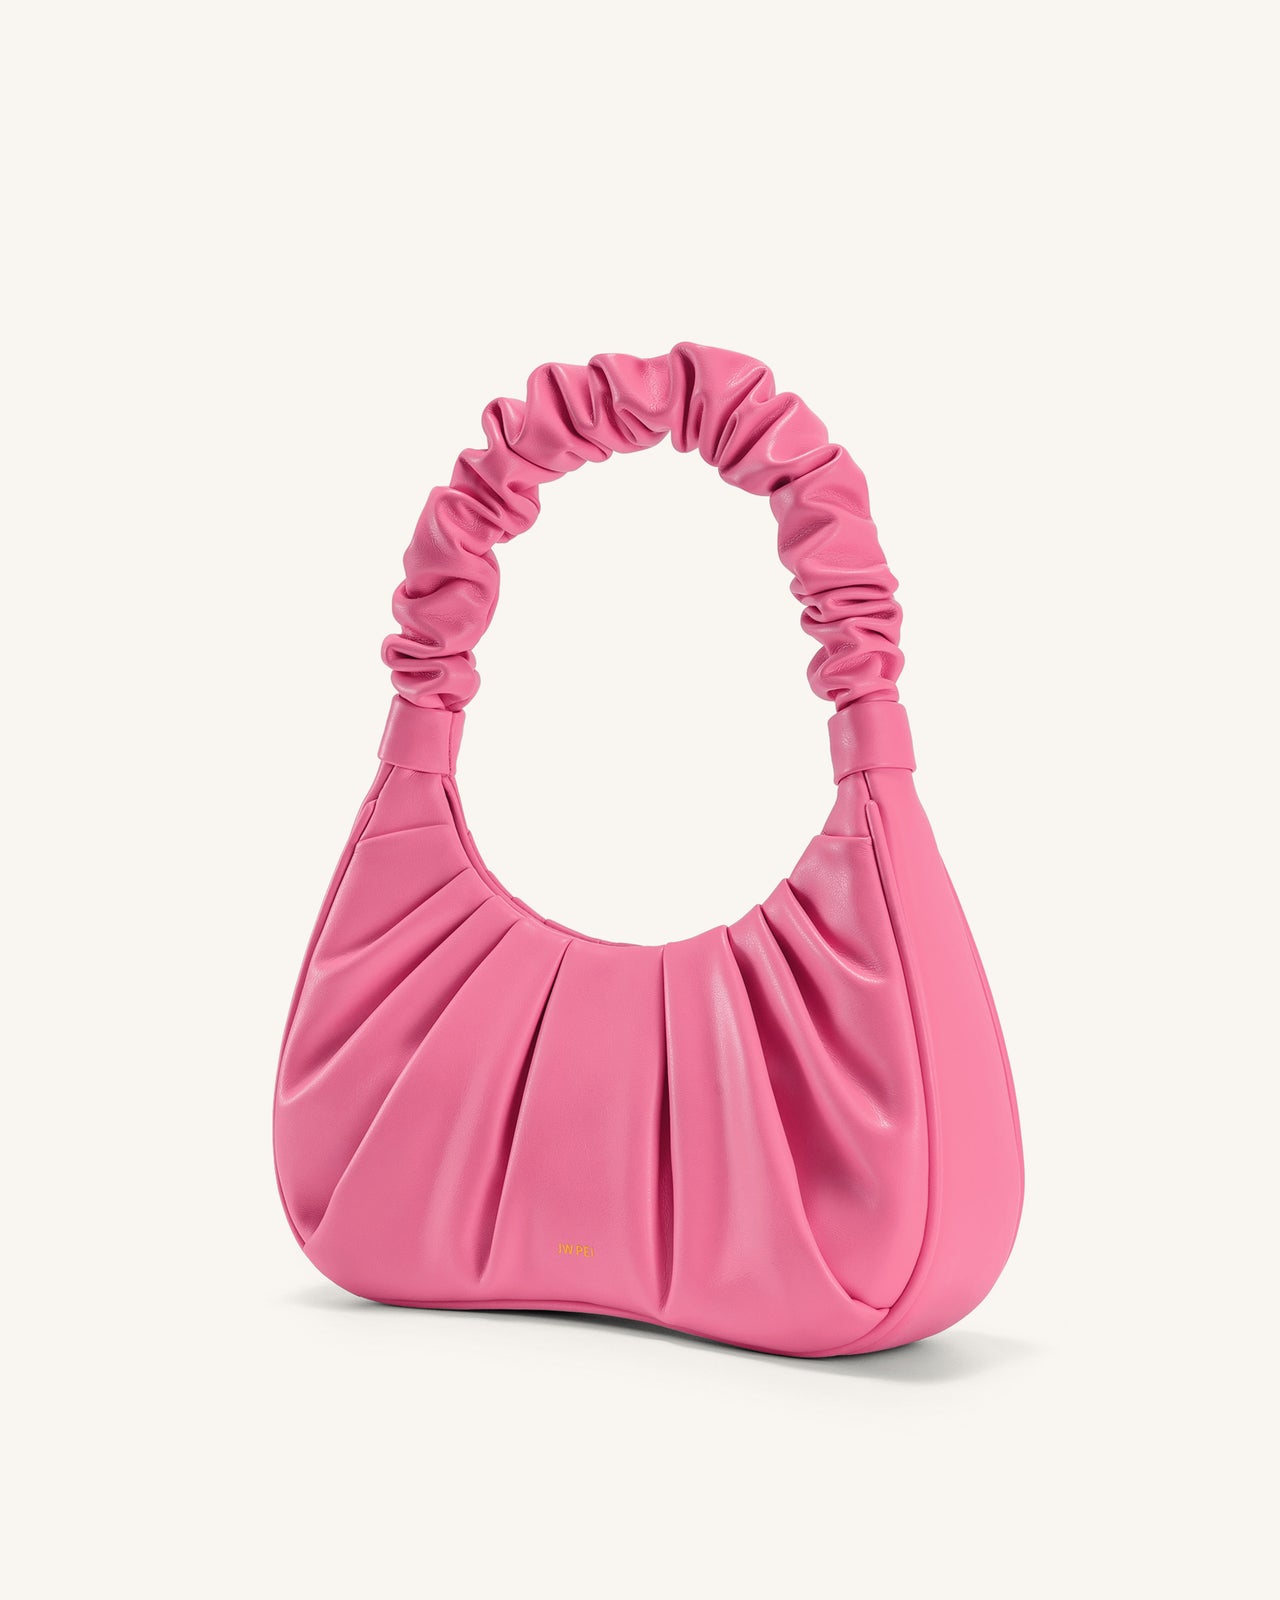  JW PEI Women's Gabbi Artifical Crystal Medium Ruched Hobo  Handbag - Anthracite : Clothing, Shoes & Jewelry